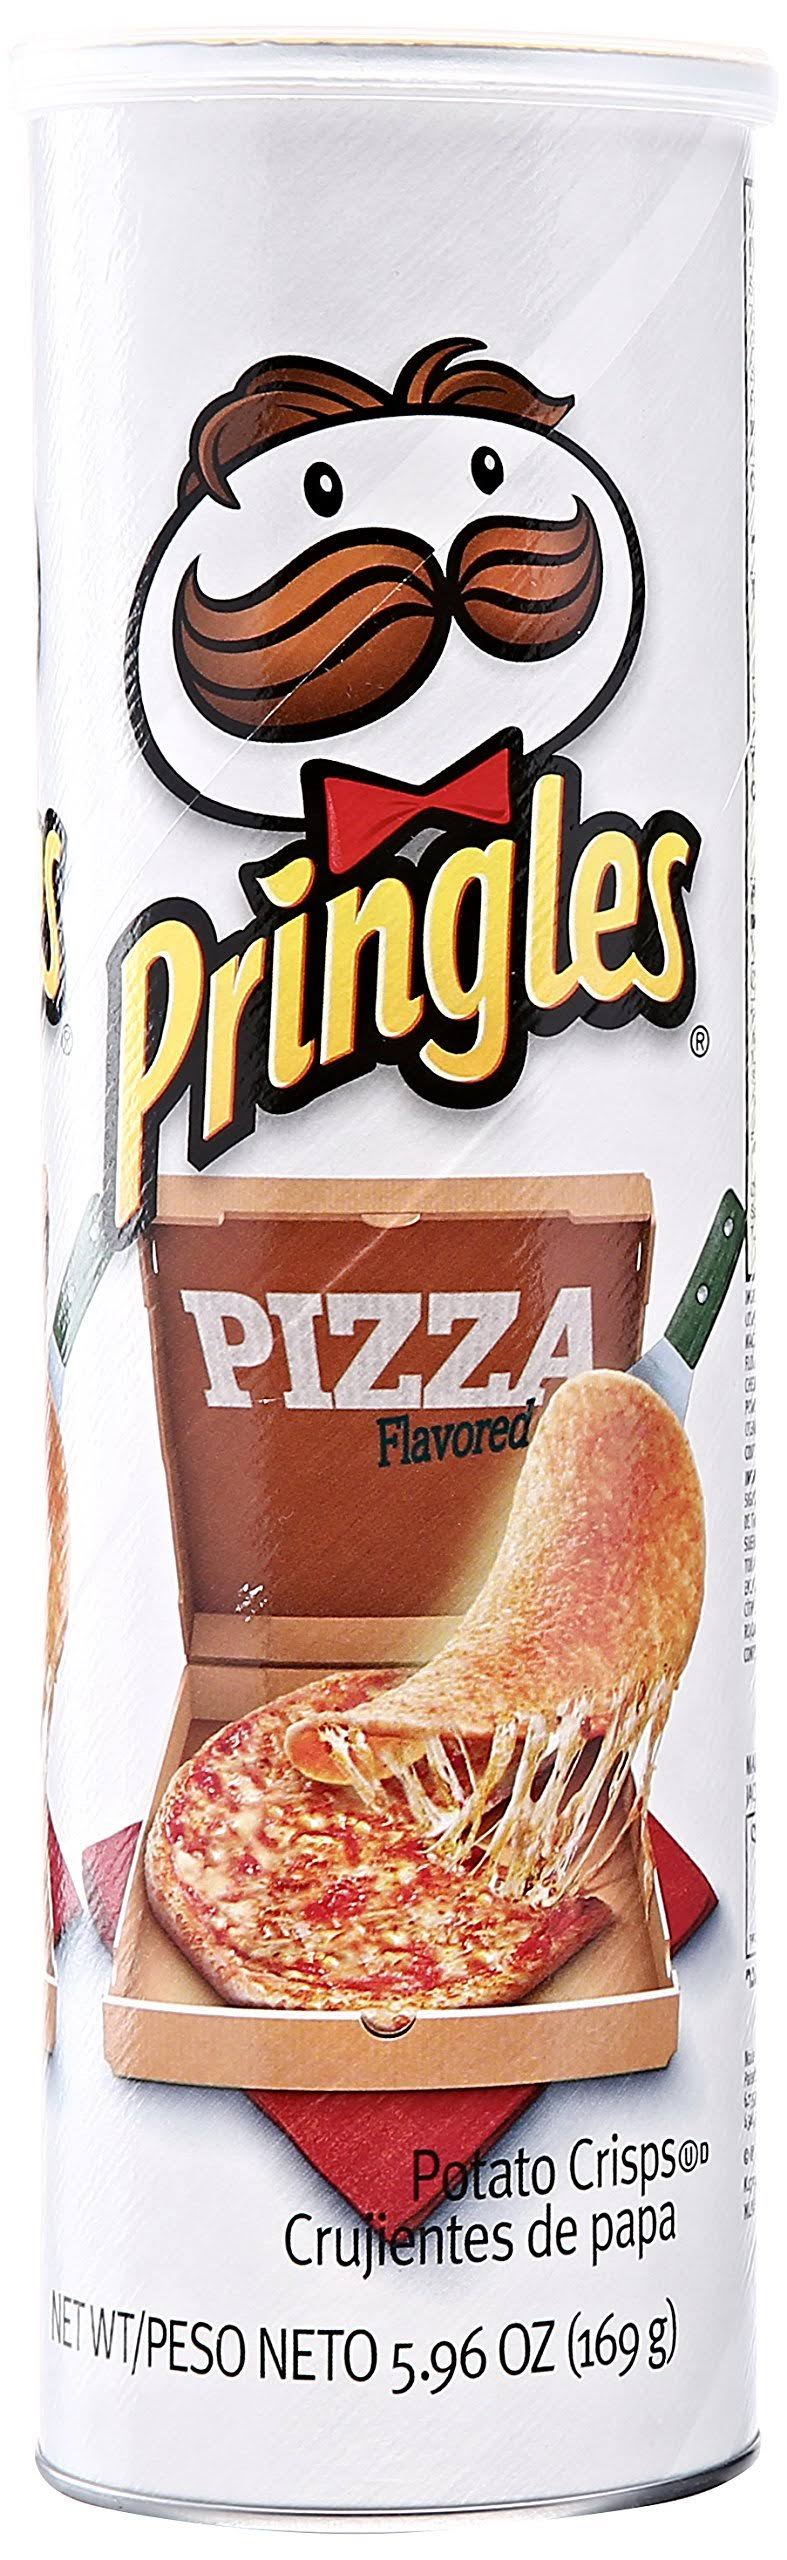 Pringle Potato Crisps - 5.96oz, Pizza Flavor